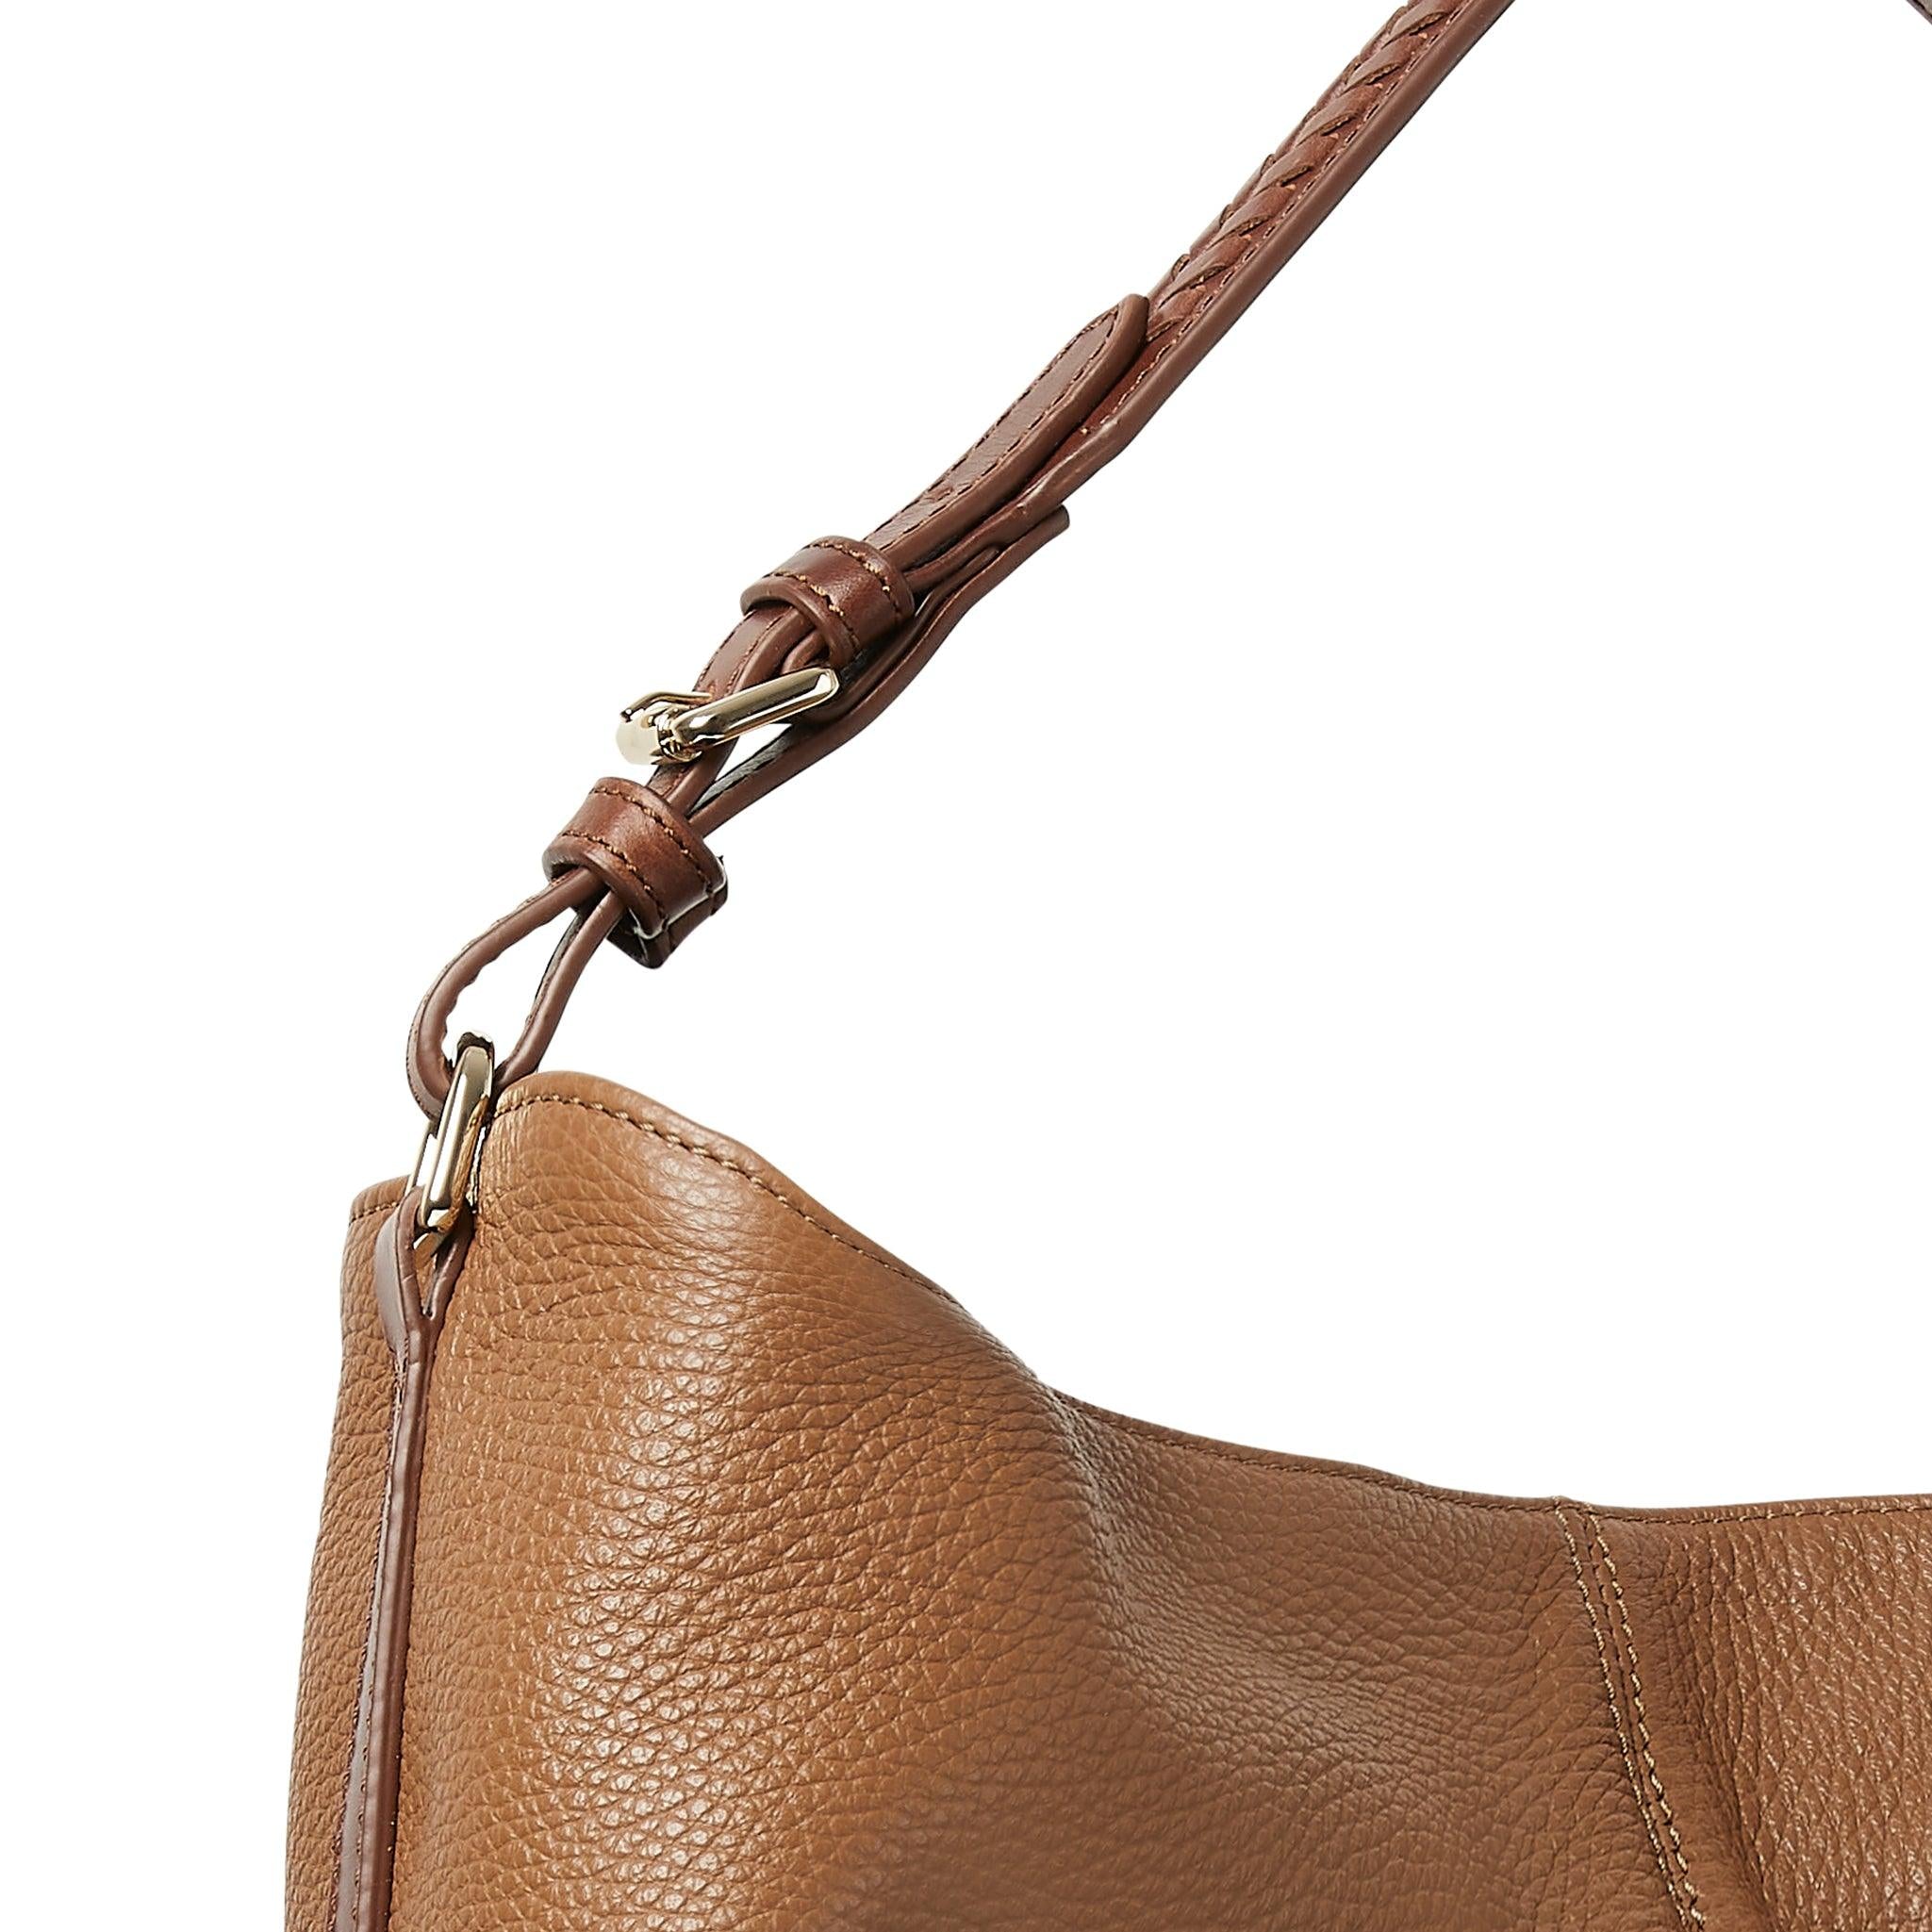 Fairfax & Favor Tetbury Ladies Shoulder Bag - Tan Leather - William Powell